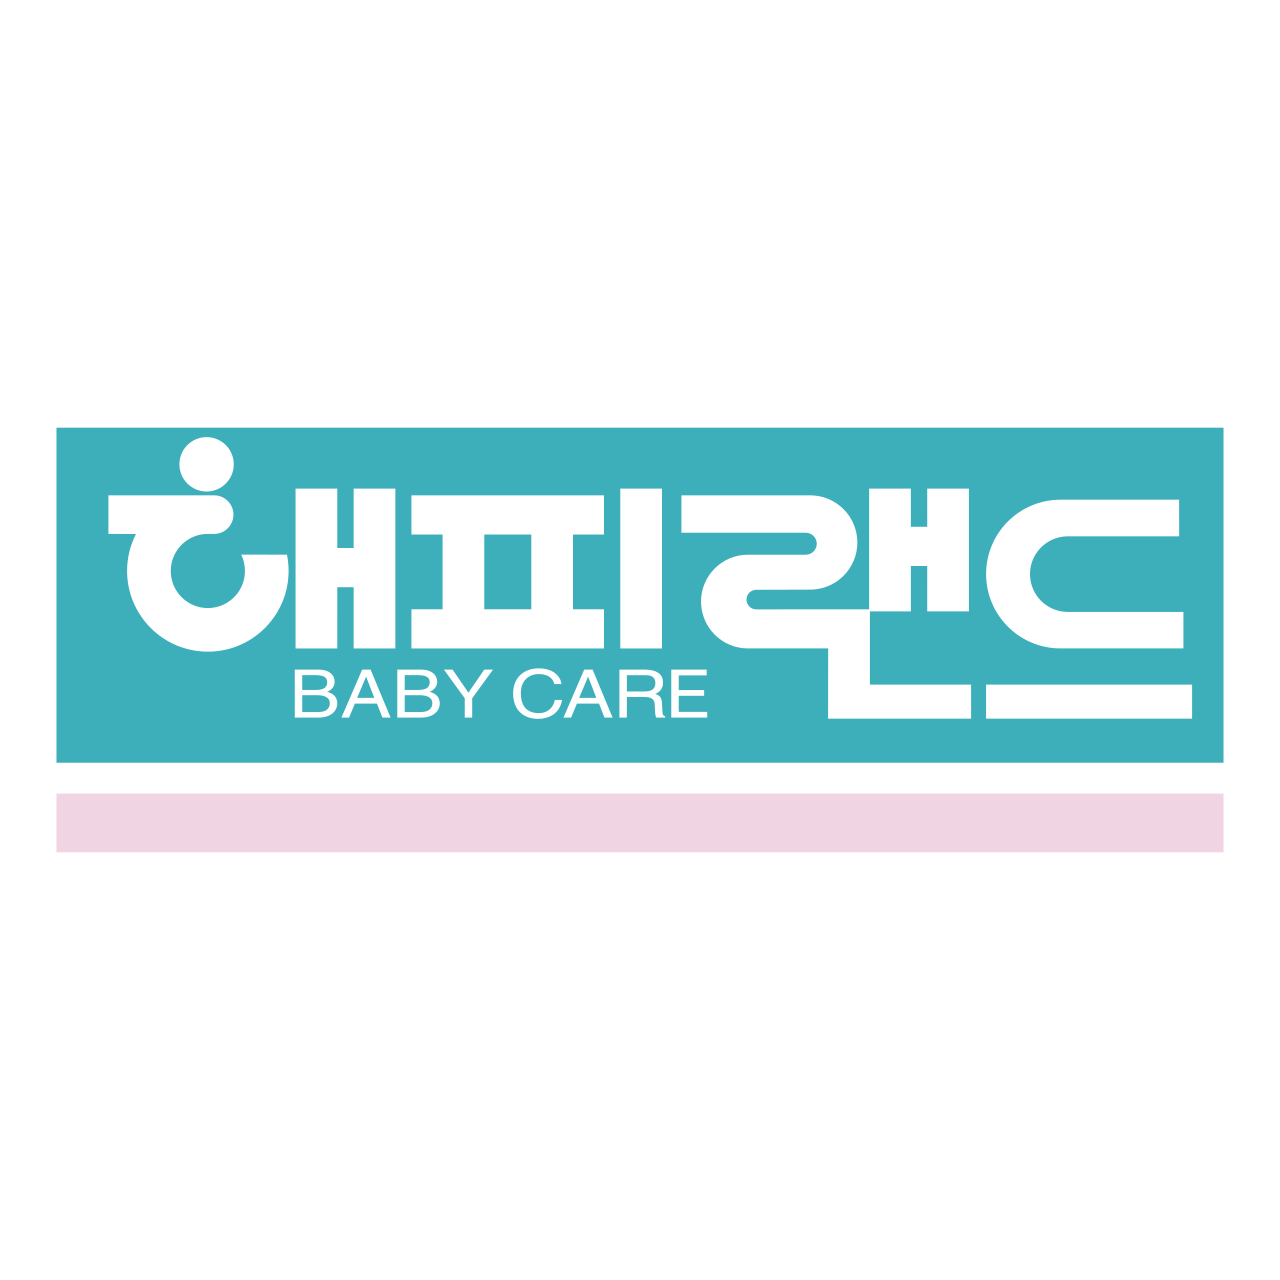 Baby Care Logo Design Minimalist Graphic by byemalkan · Creative Fabrica